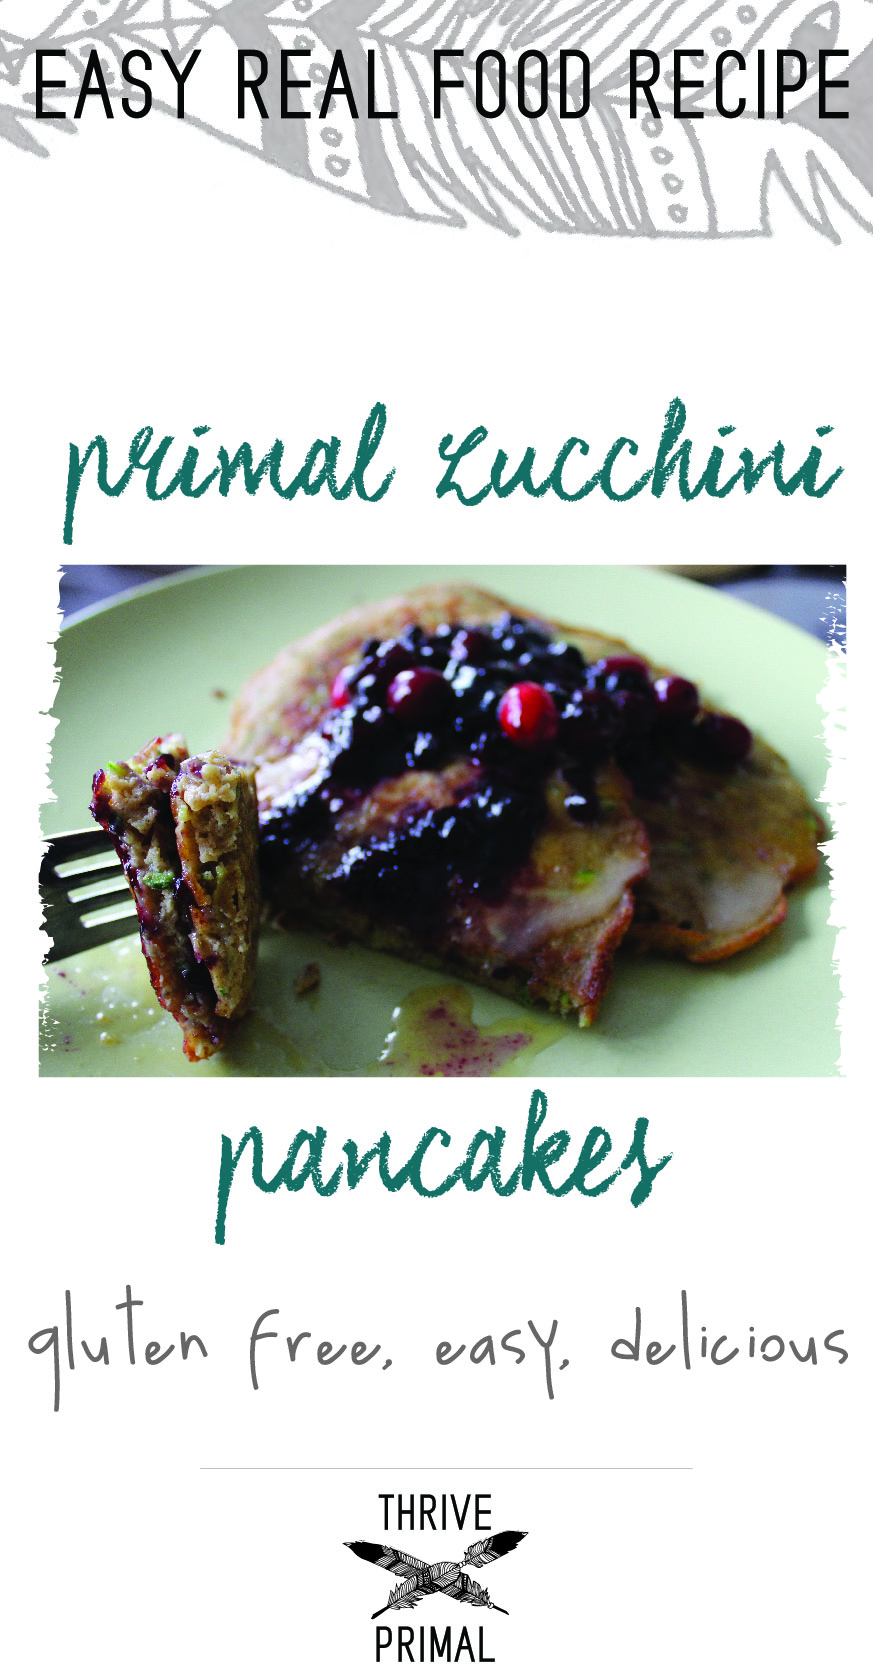 https://www.thriveprimal.com/wp-content/uploads/2015/01/Thrive-Primal-primal-zucchini-pancakes-recipe-FB-2-01.jpg